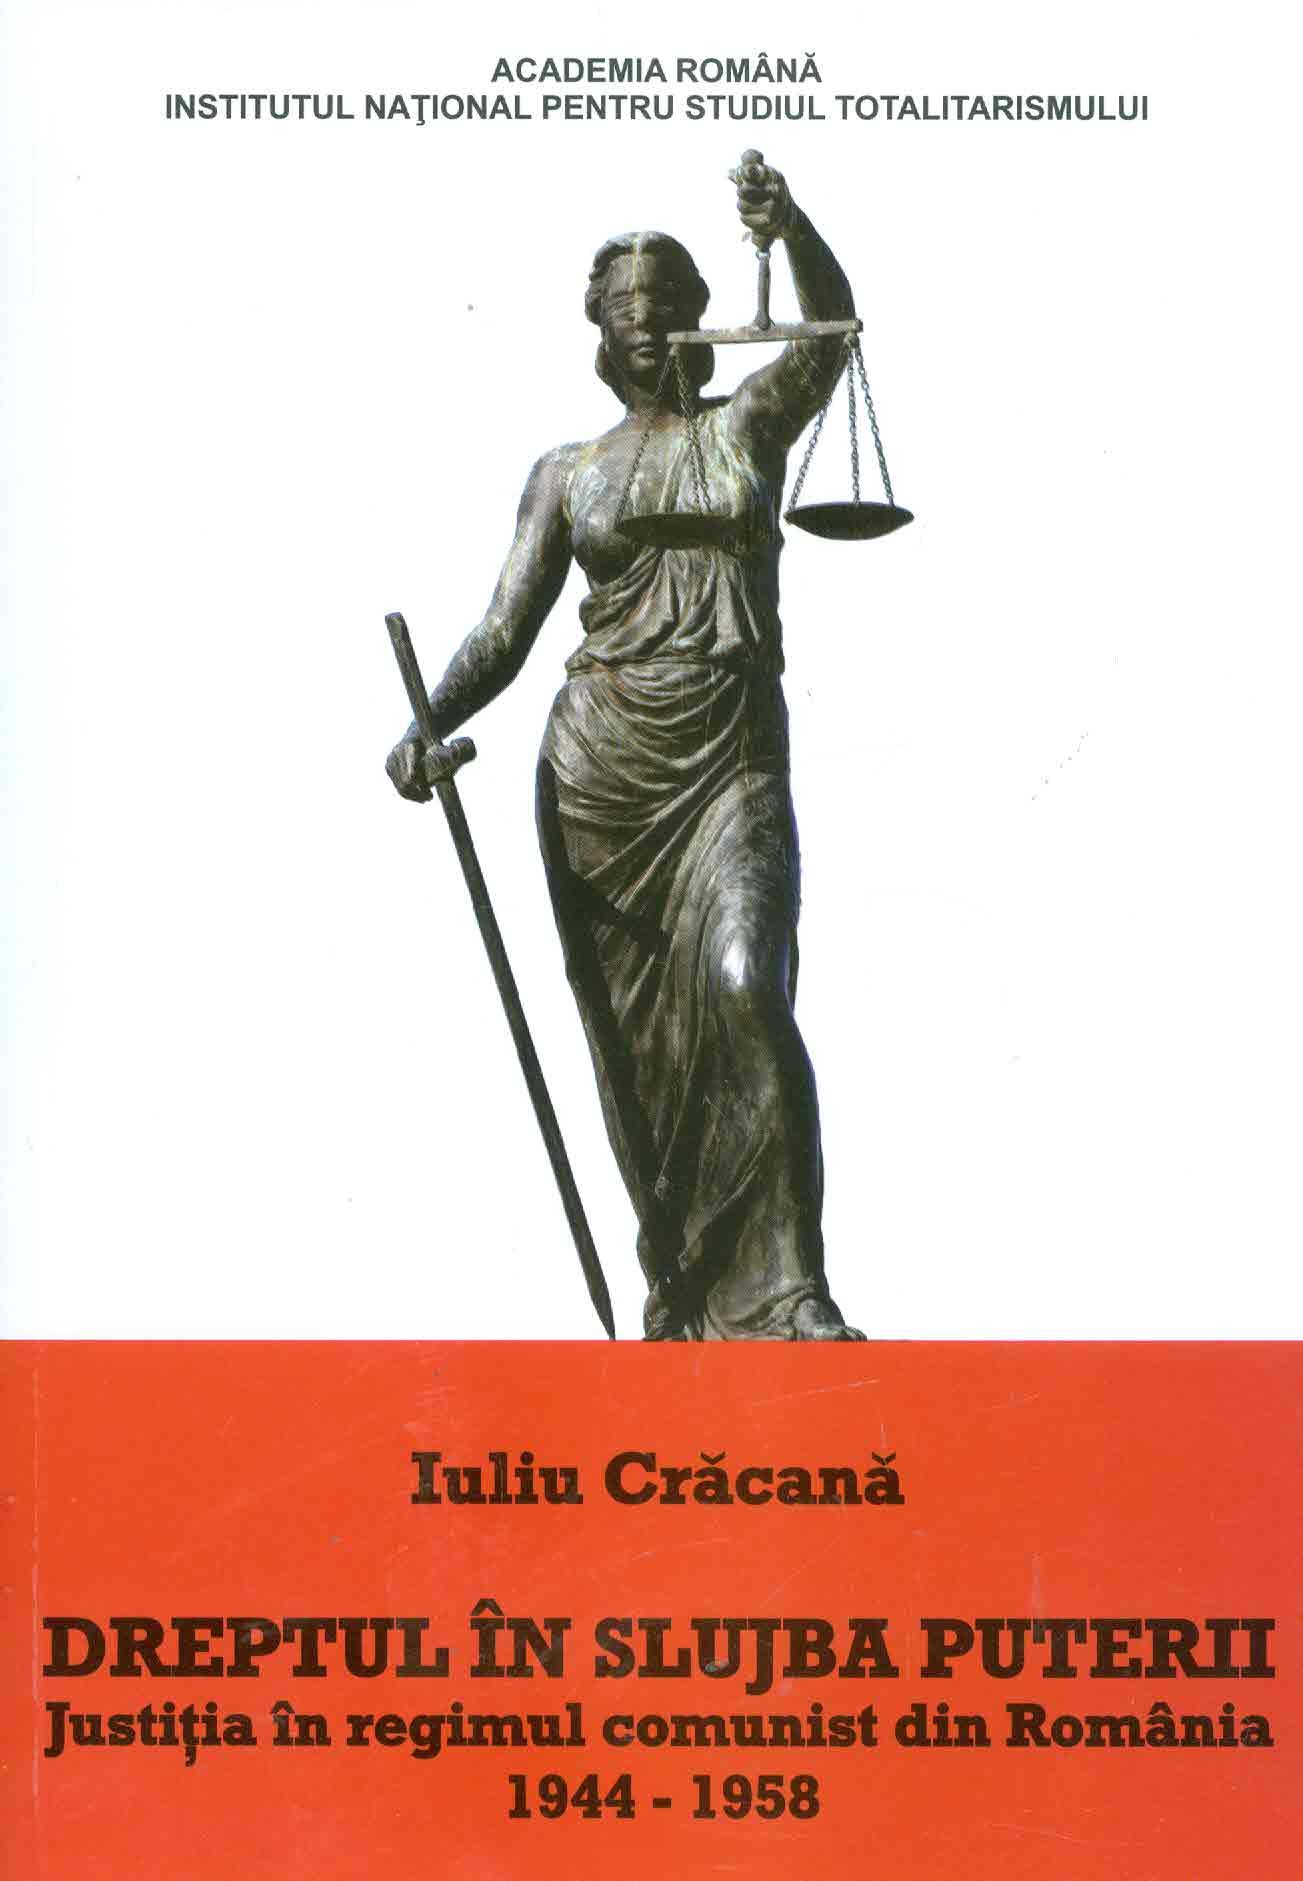 Dreptul in slujba puterii. Justitia in regimul comunist din Romania, 1944-1958